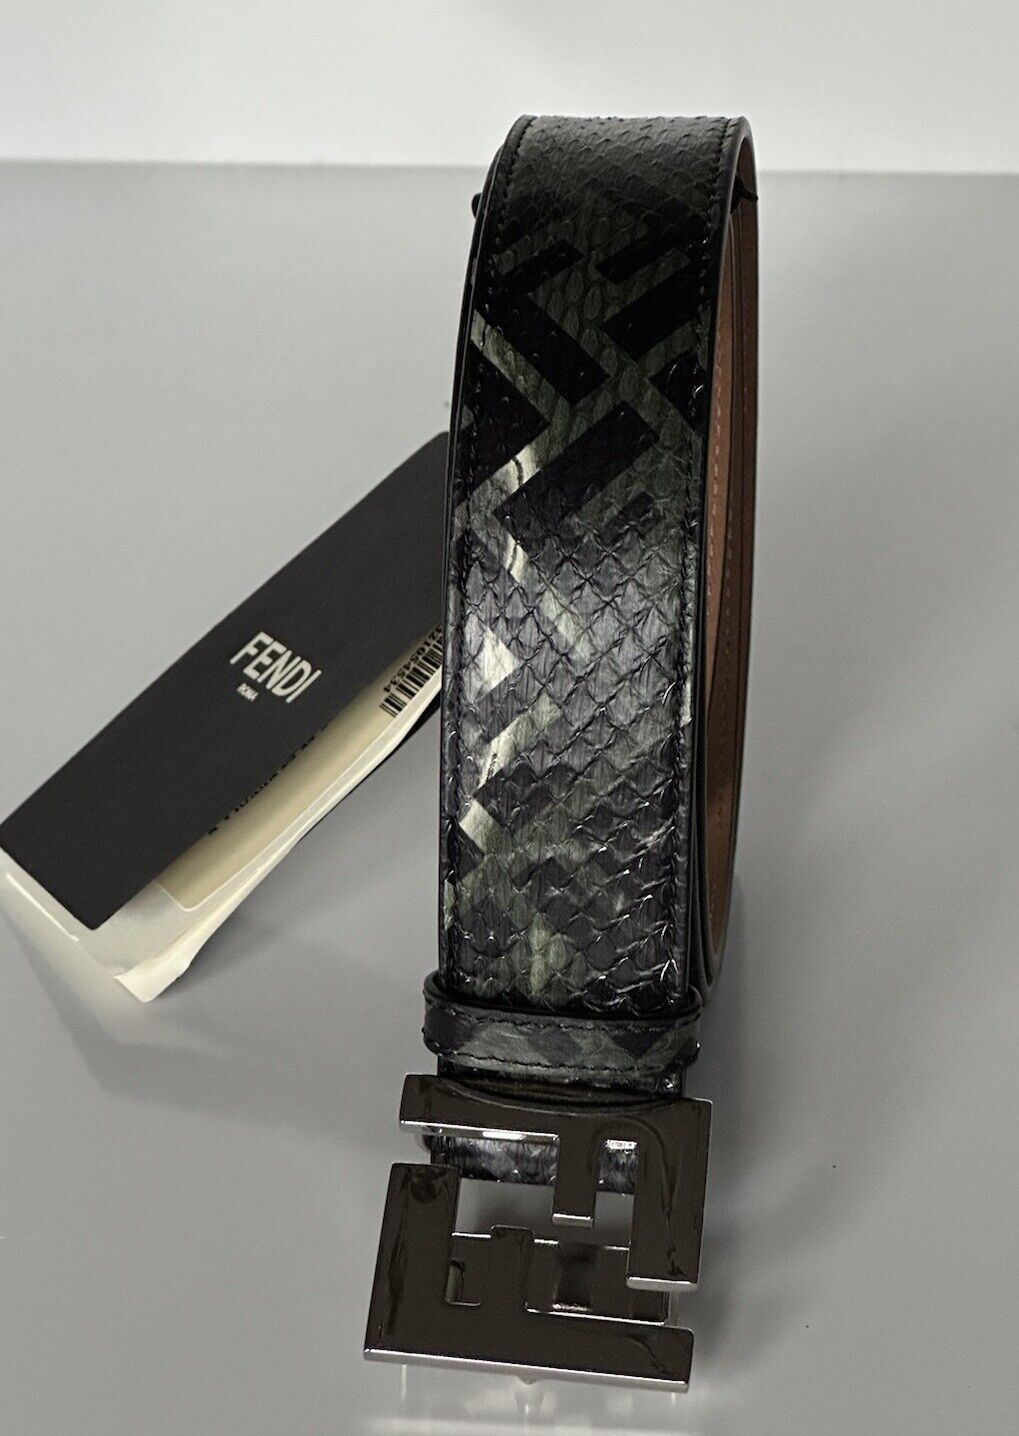 NWT $1100 Fendi FF Colubrid Snake Skin Leather Belt 100/40 7C0404 IT